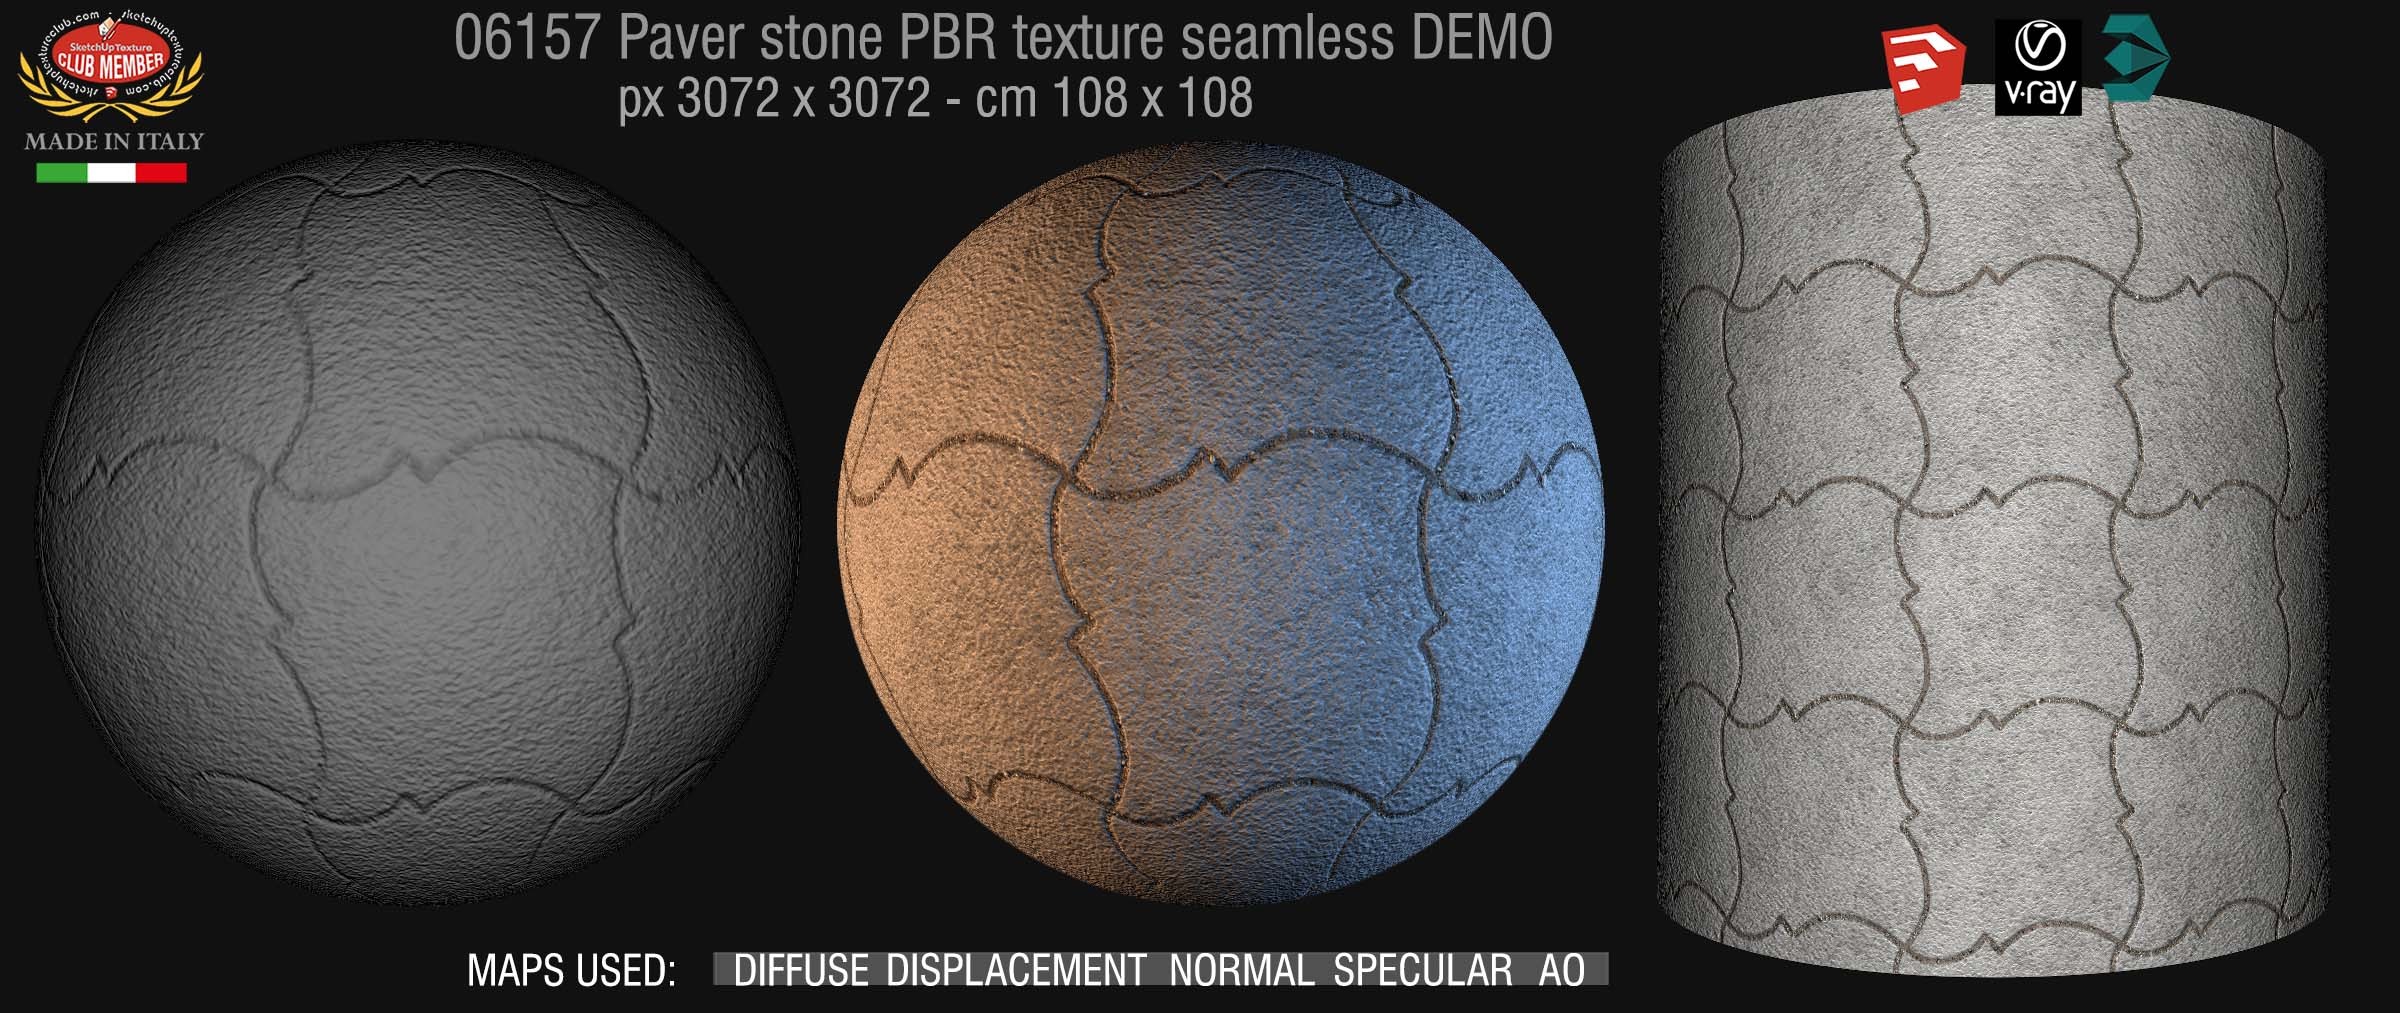 06157 paver stone PBR texture seamless DEMO